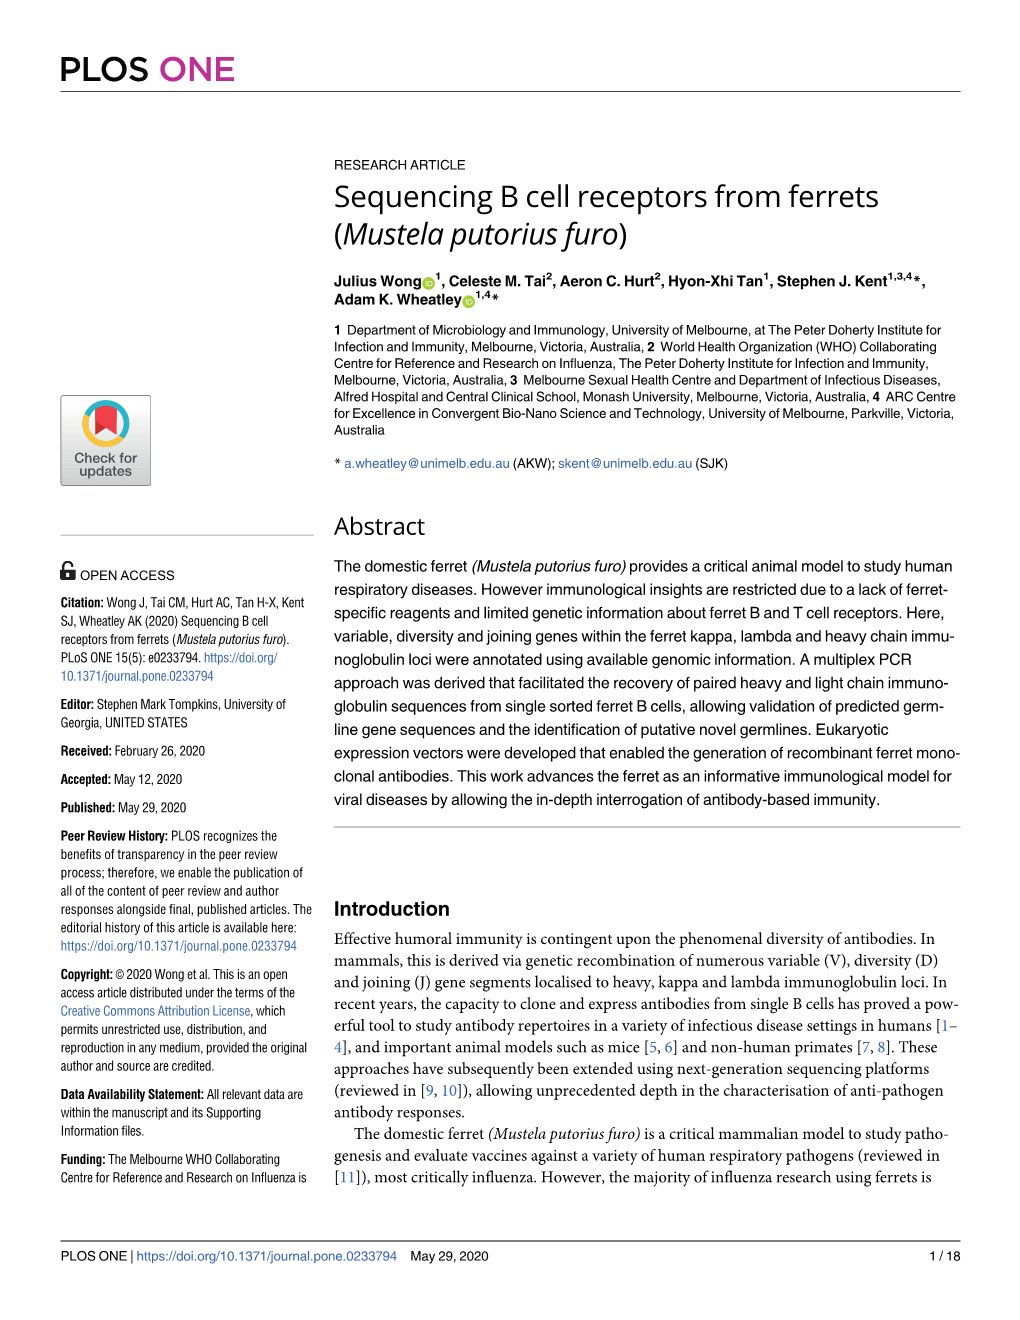 Sequencing B Cell Receptors from Ferrets (Mustela Putorius Furo)